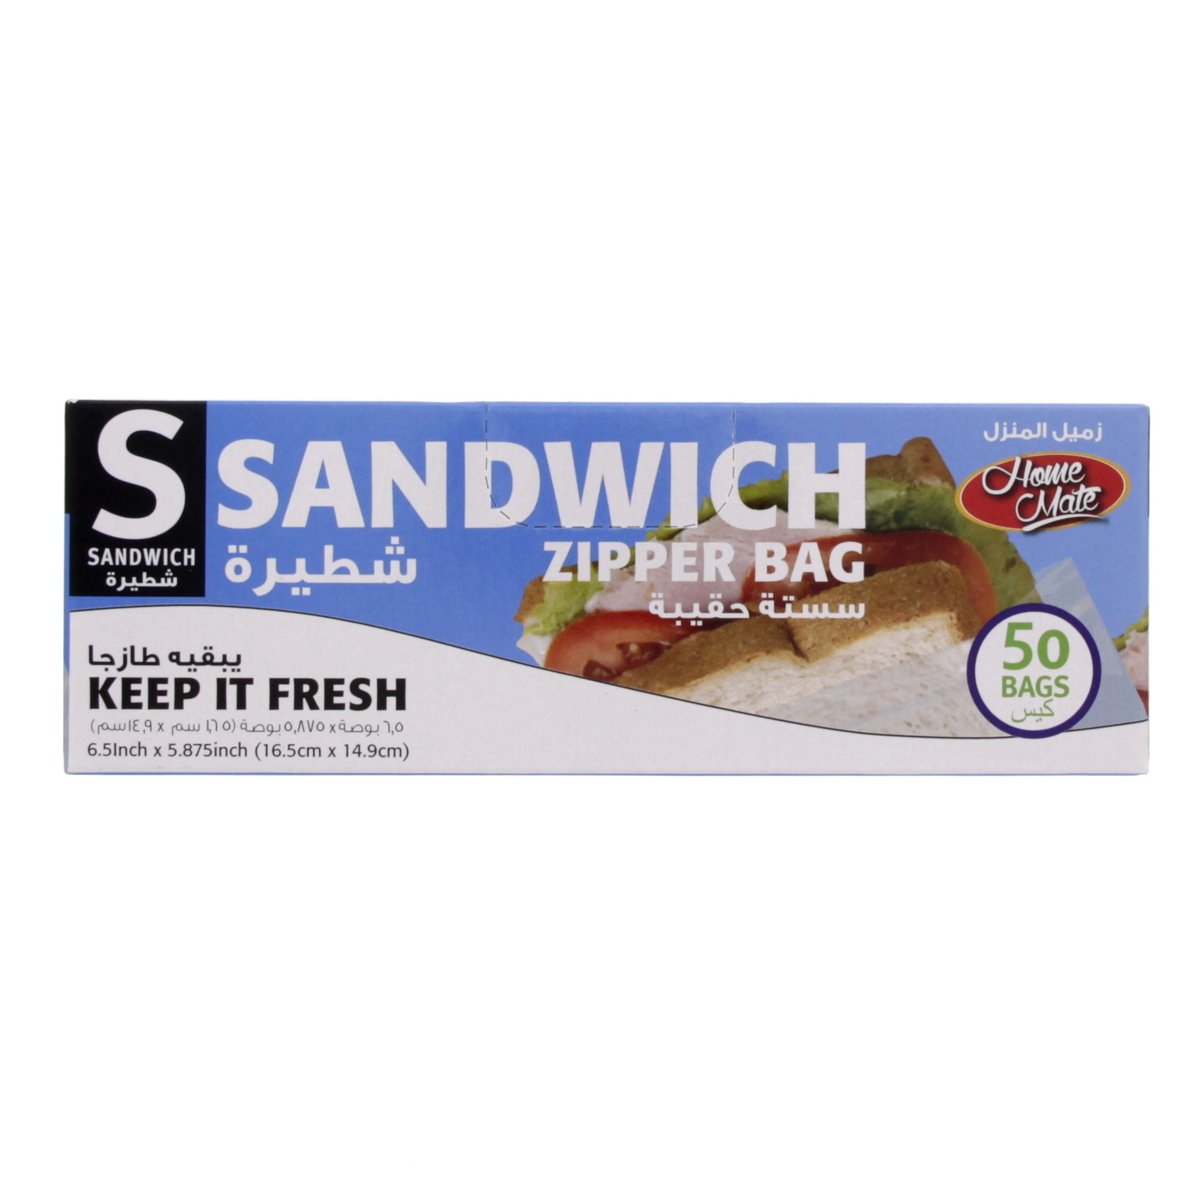 Home Mate Sandwich Zipper Bag Small Size 16.5cm x 14.9cm 50pcs